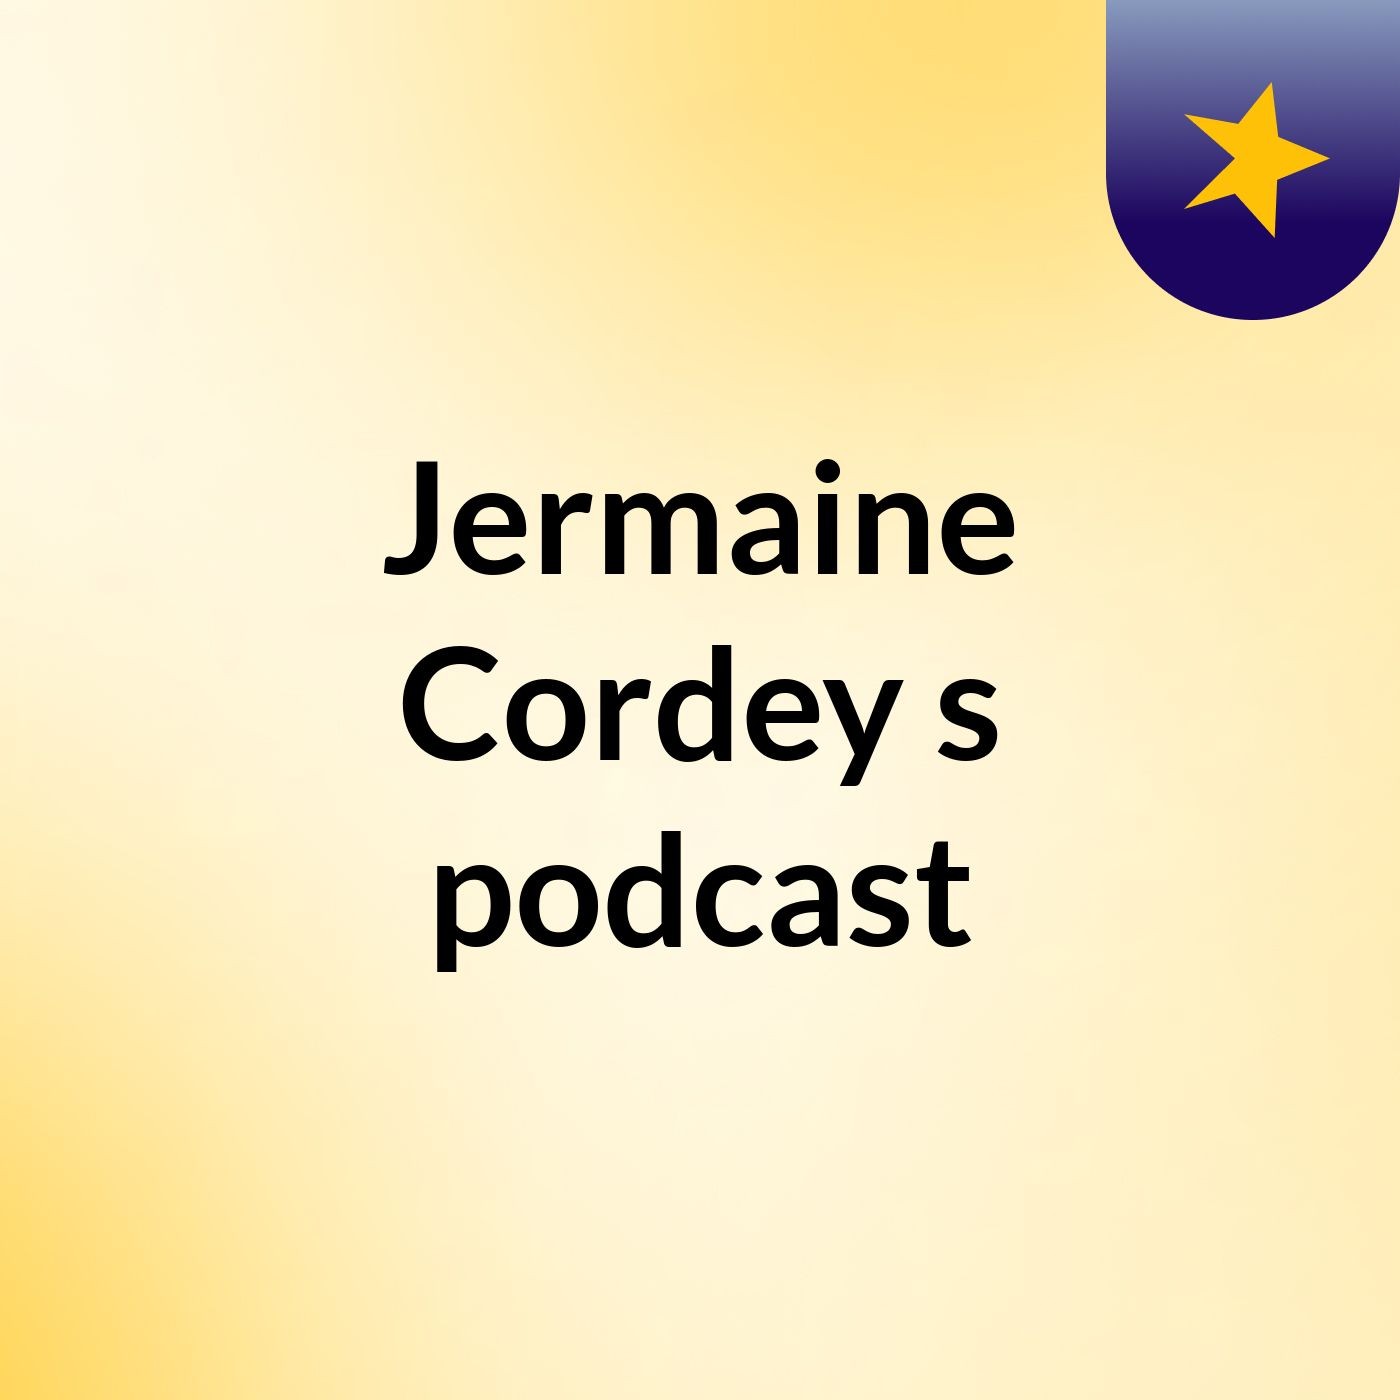 Episode 2 - Jermaine Cordey's podcast